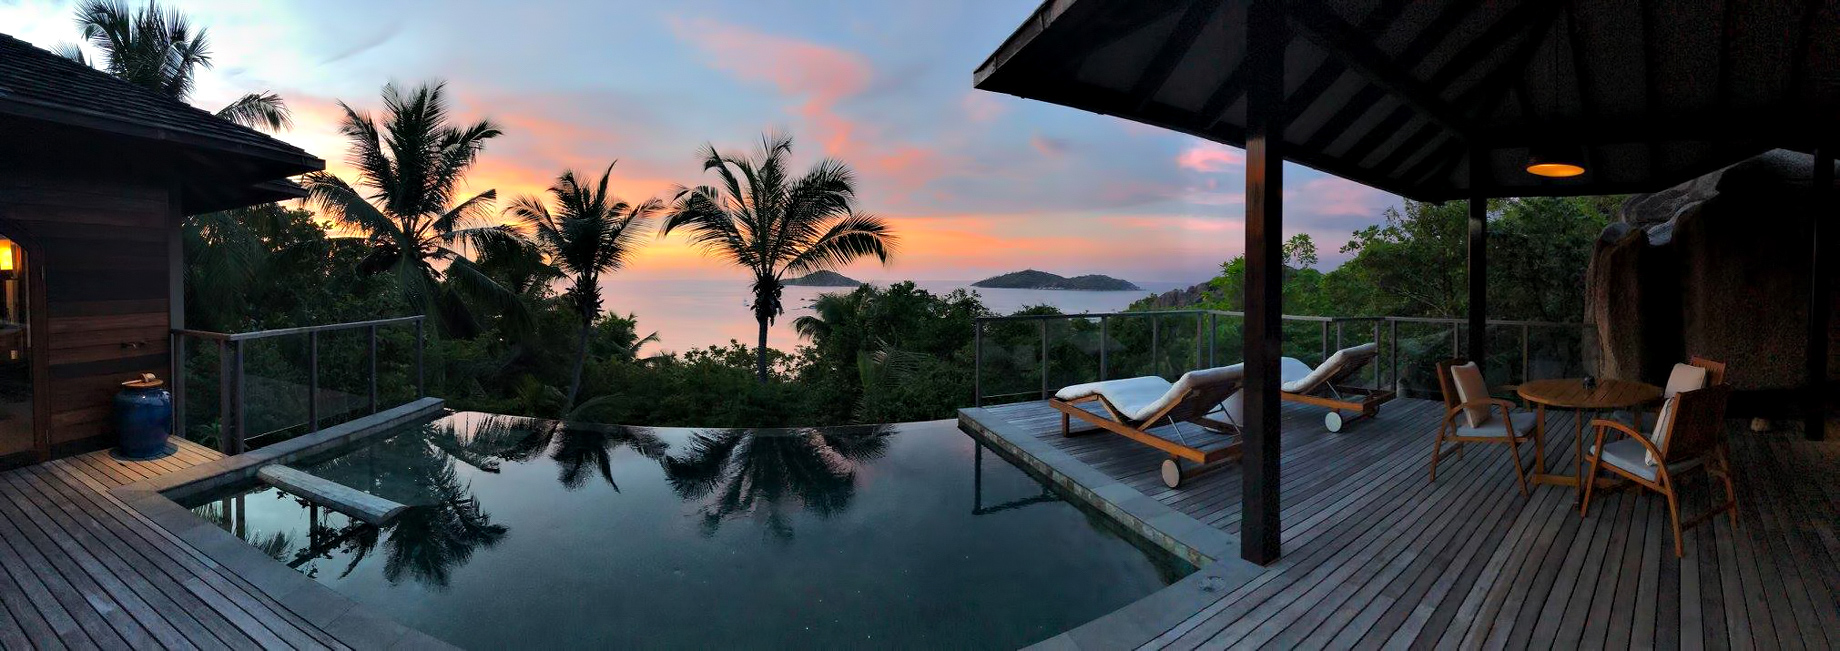 Six Senses Zil Pasyon Resort – Felicite Island, Seychelles – Tropical Island Villa Pool Deck Sunset Panorama